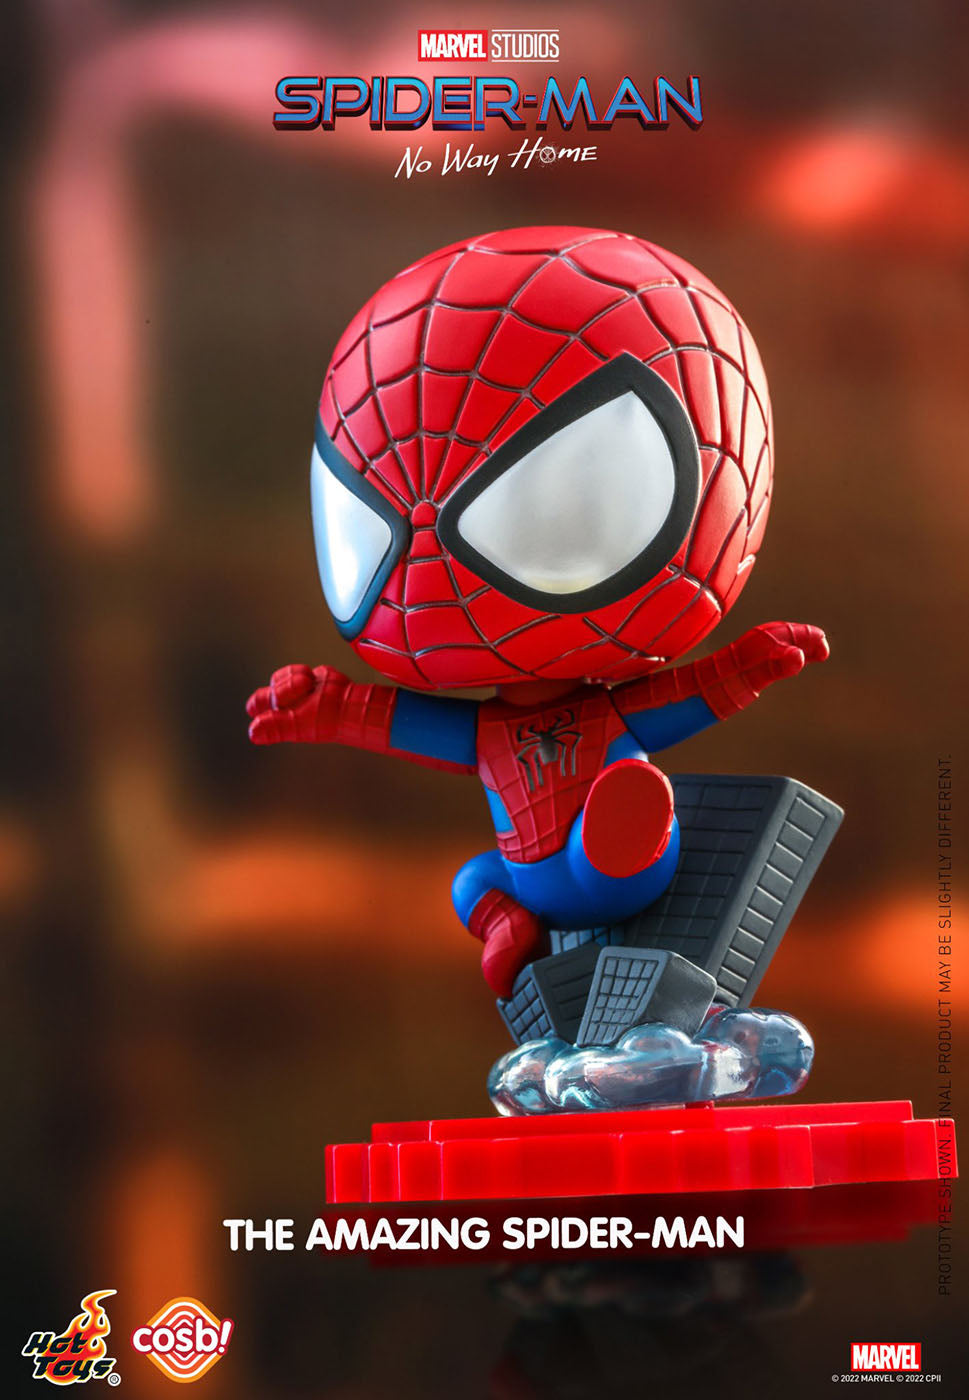 Spider-Man (The Amazing) - Cosbi